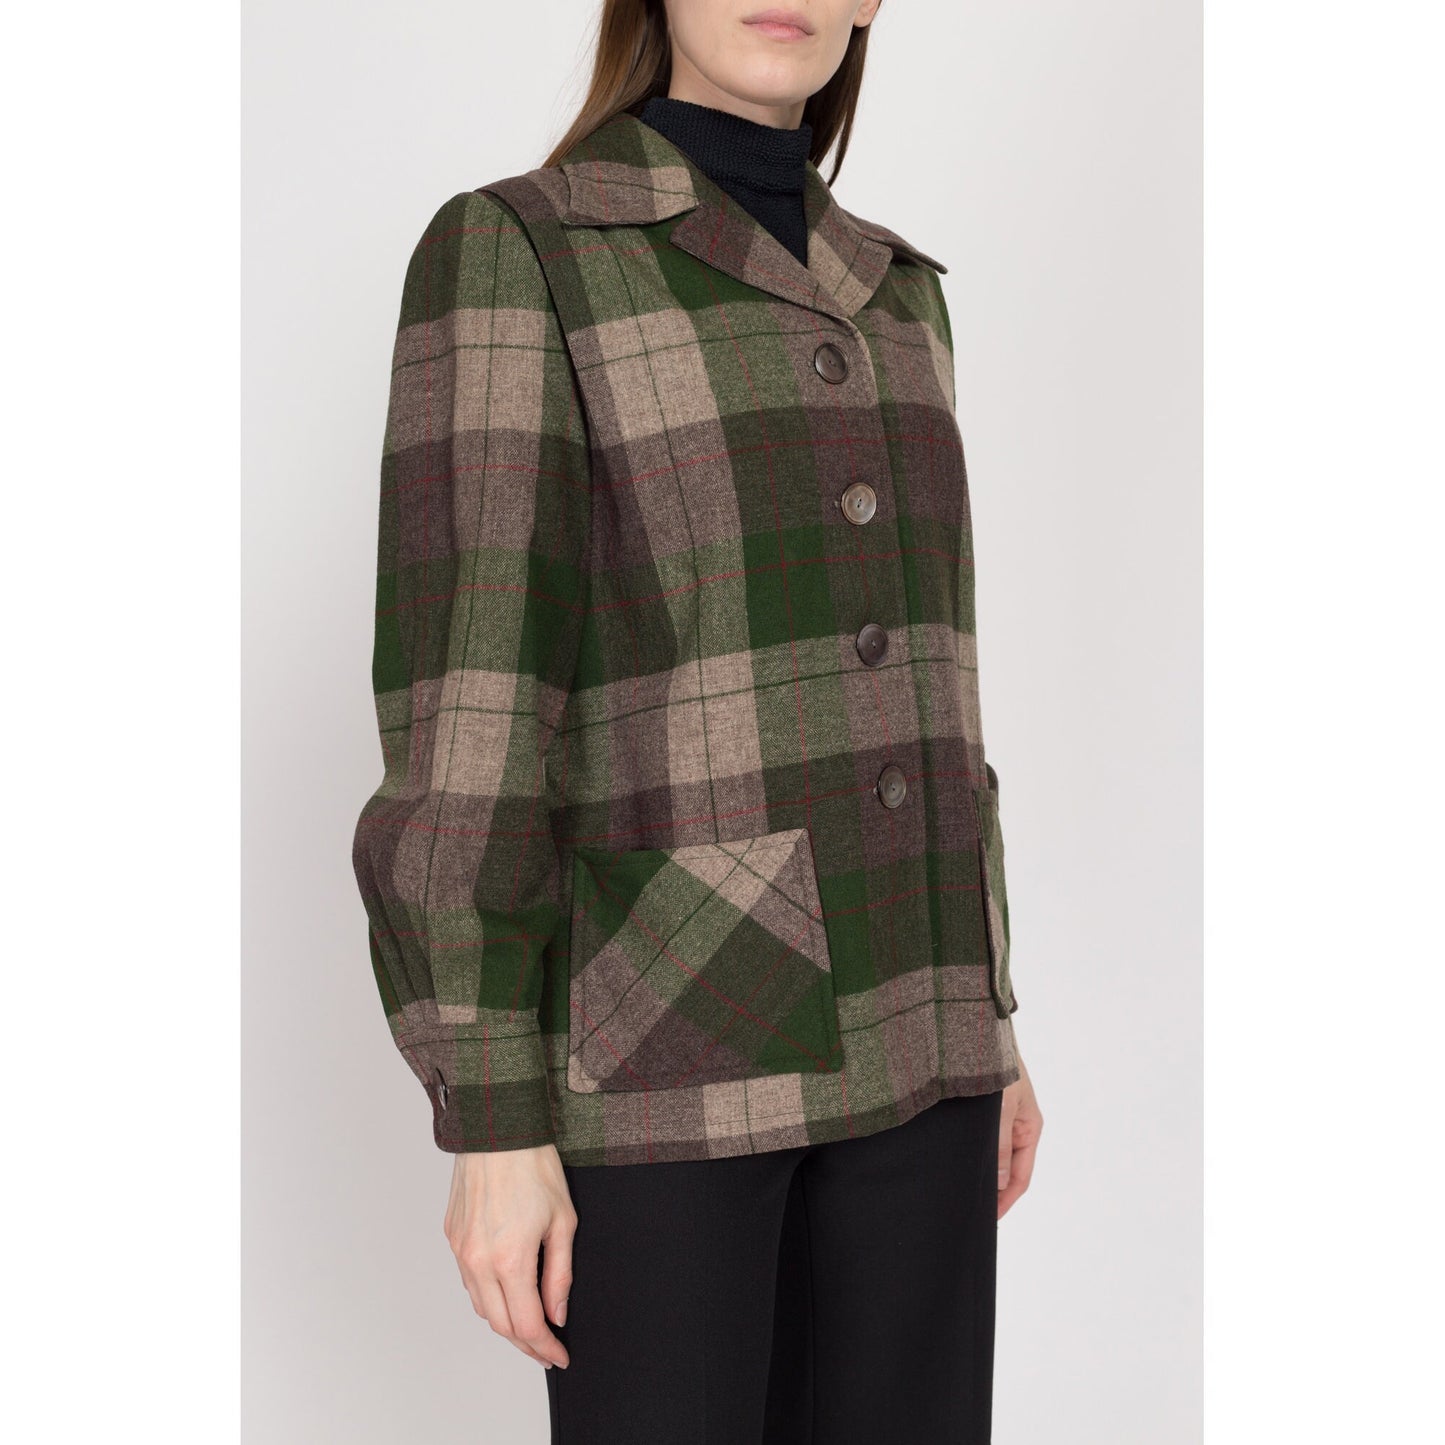 Medium 1950s Pendleton 49er Green Plaid Wool Jacket | Vintage 50s Rockabilly Button Up Pocket Overshirt